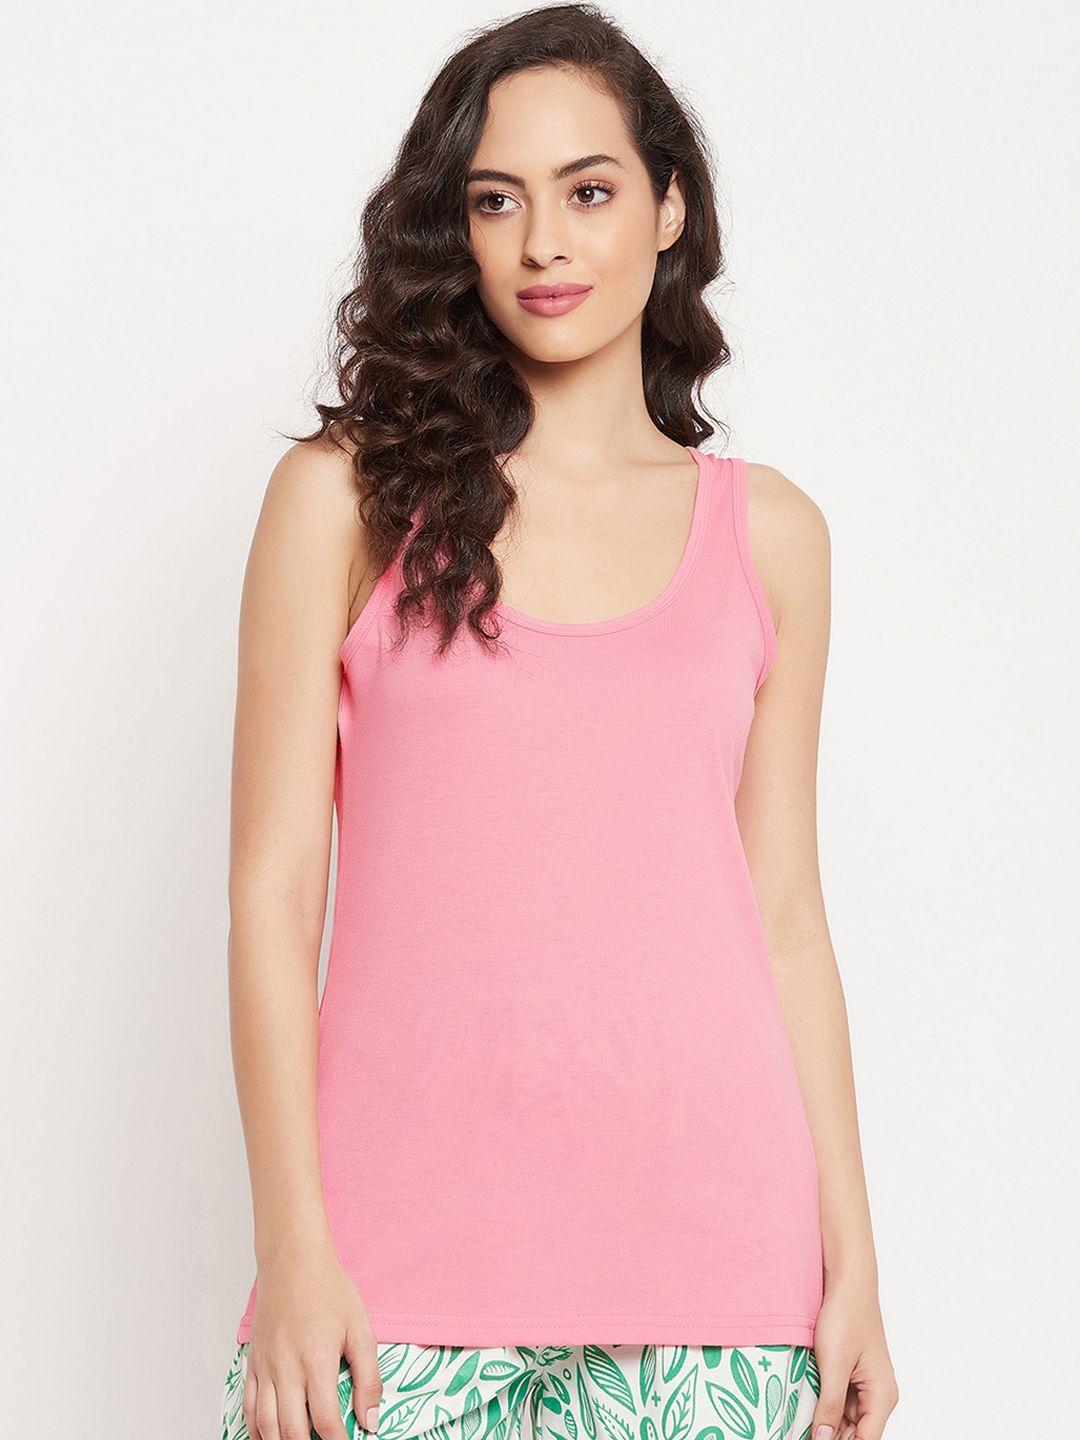 clovia women pink solid sleeveless tank top camisoles